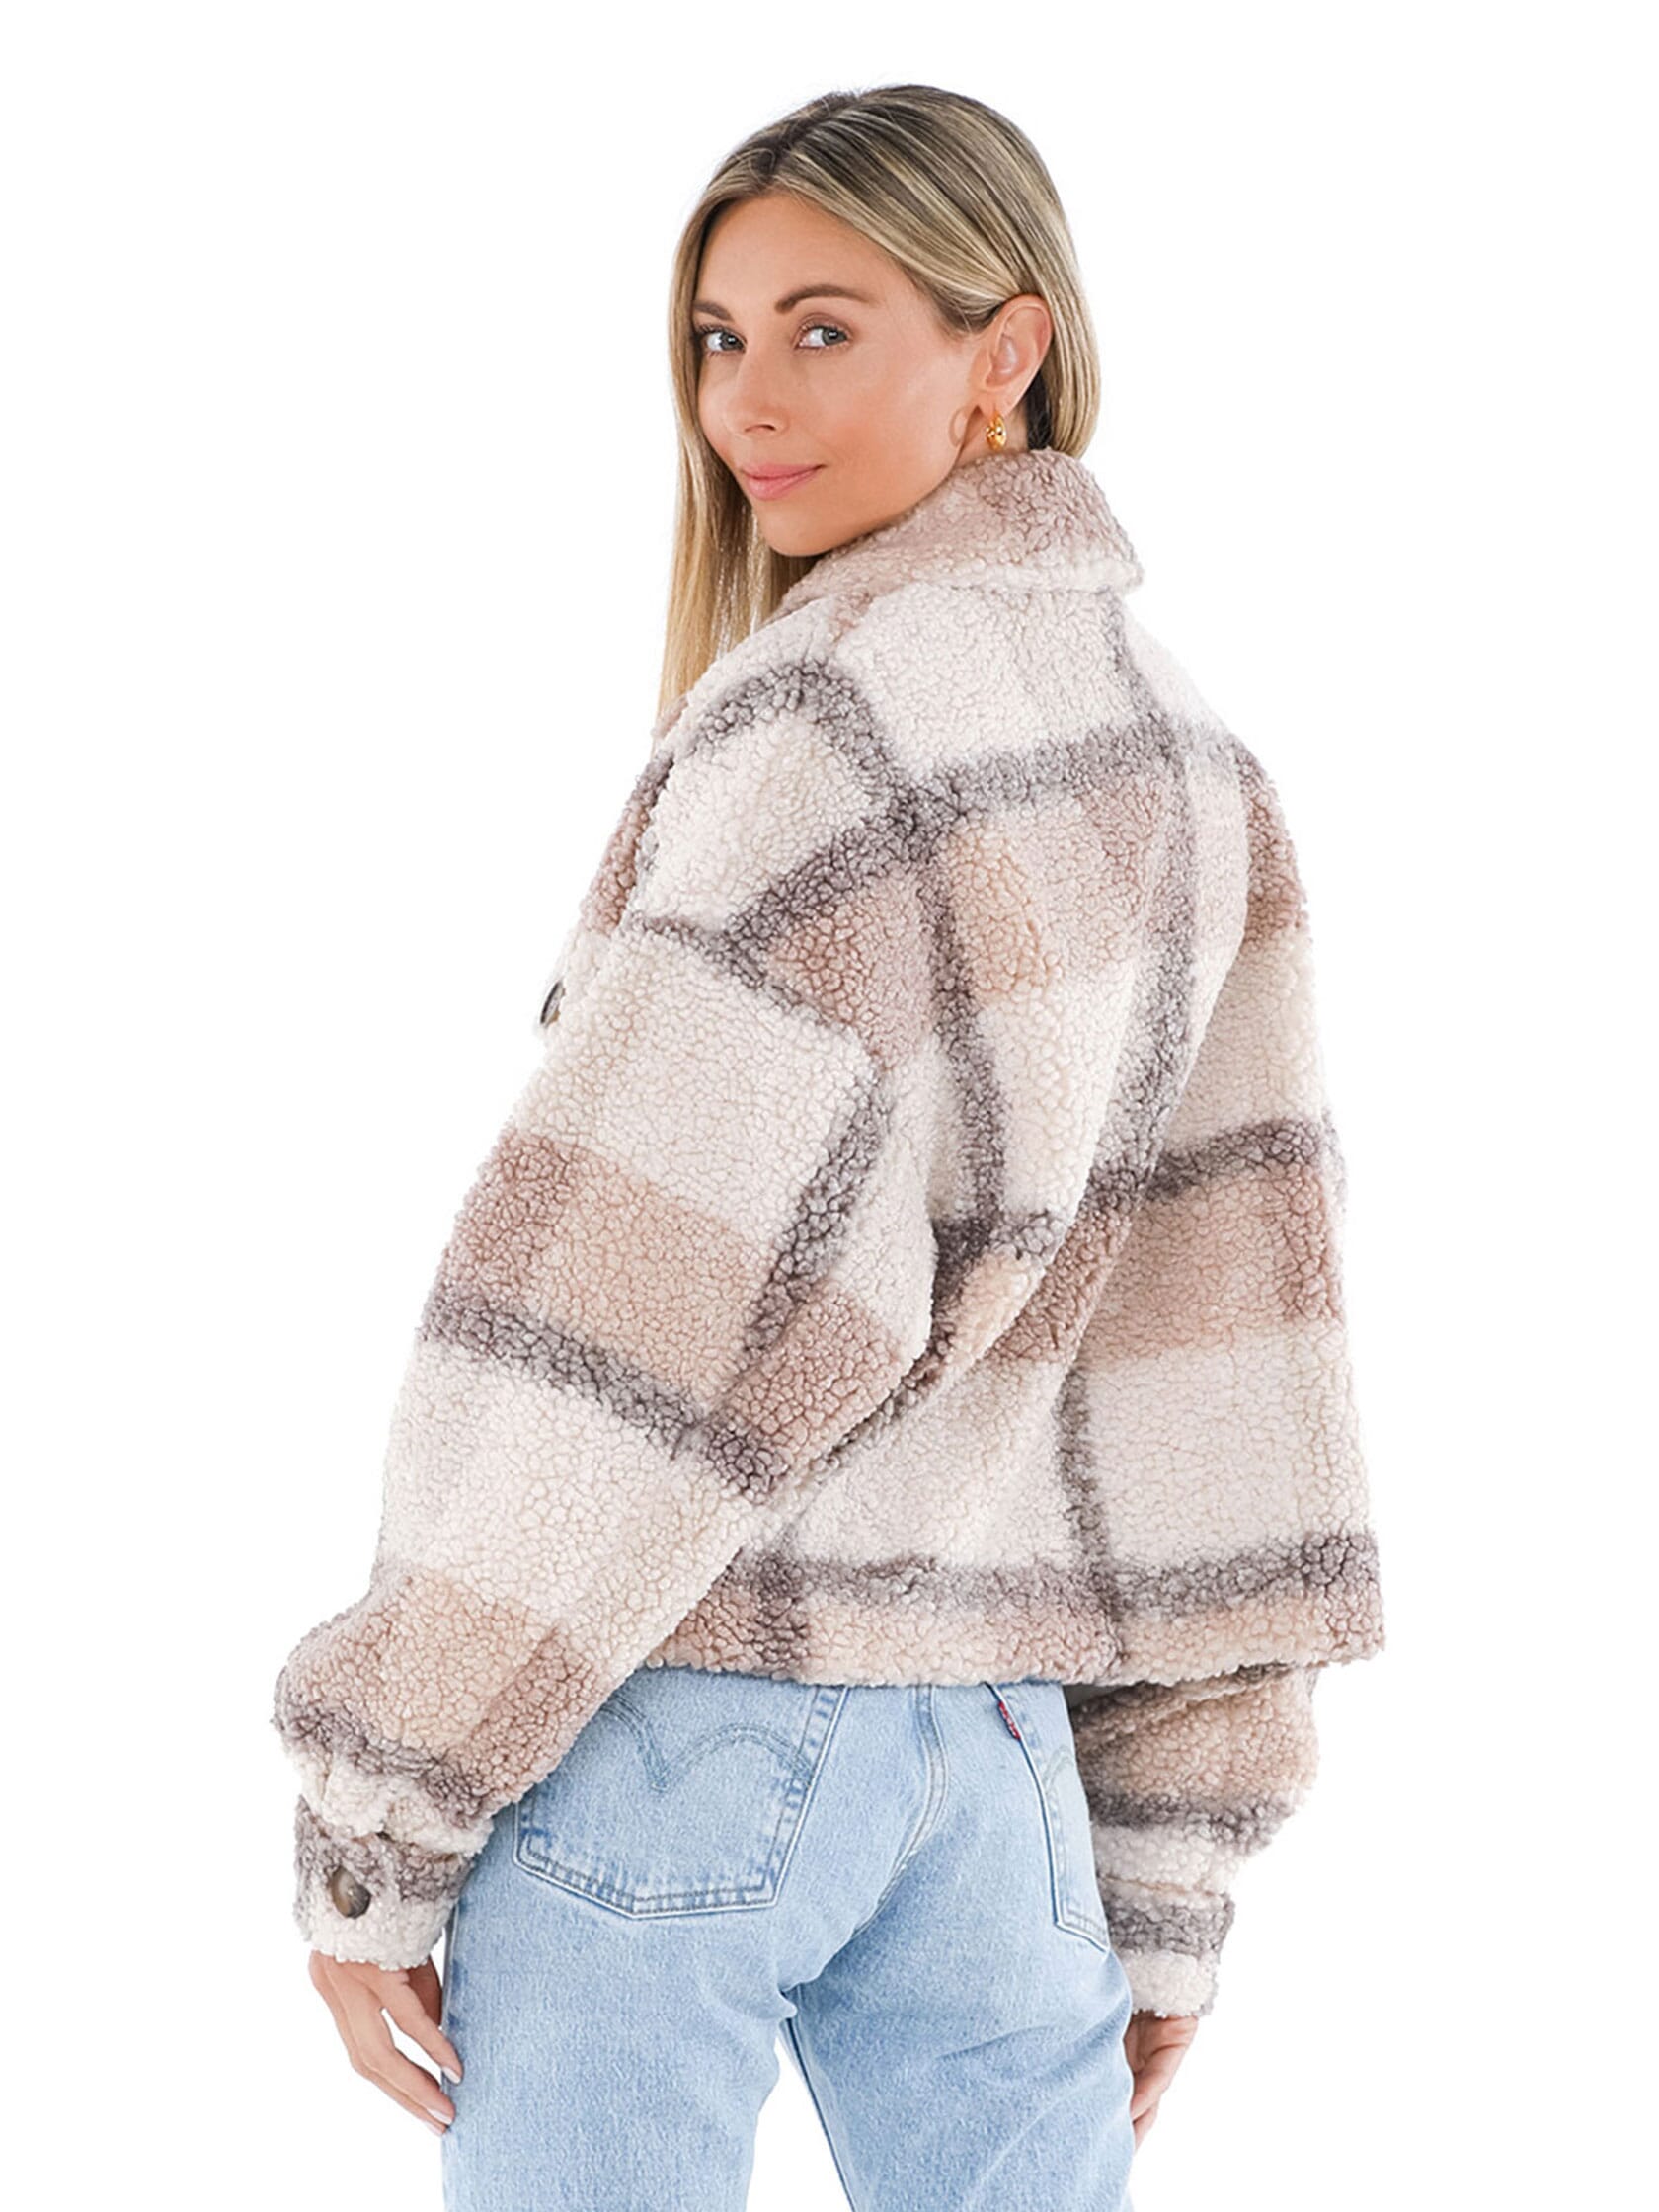 BB Dakota | Plaid To See You Coat in Light Camel| FashionPass